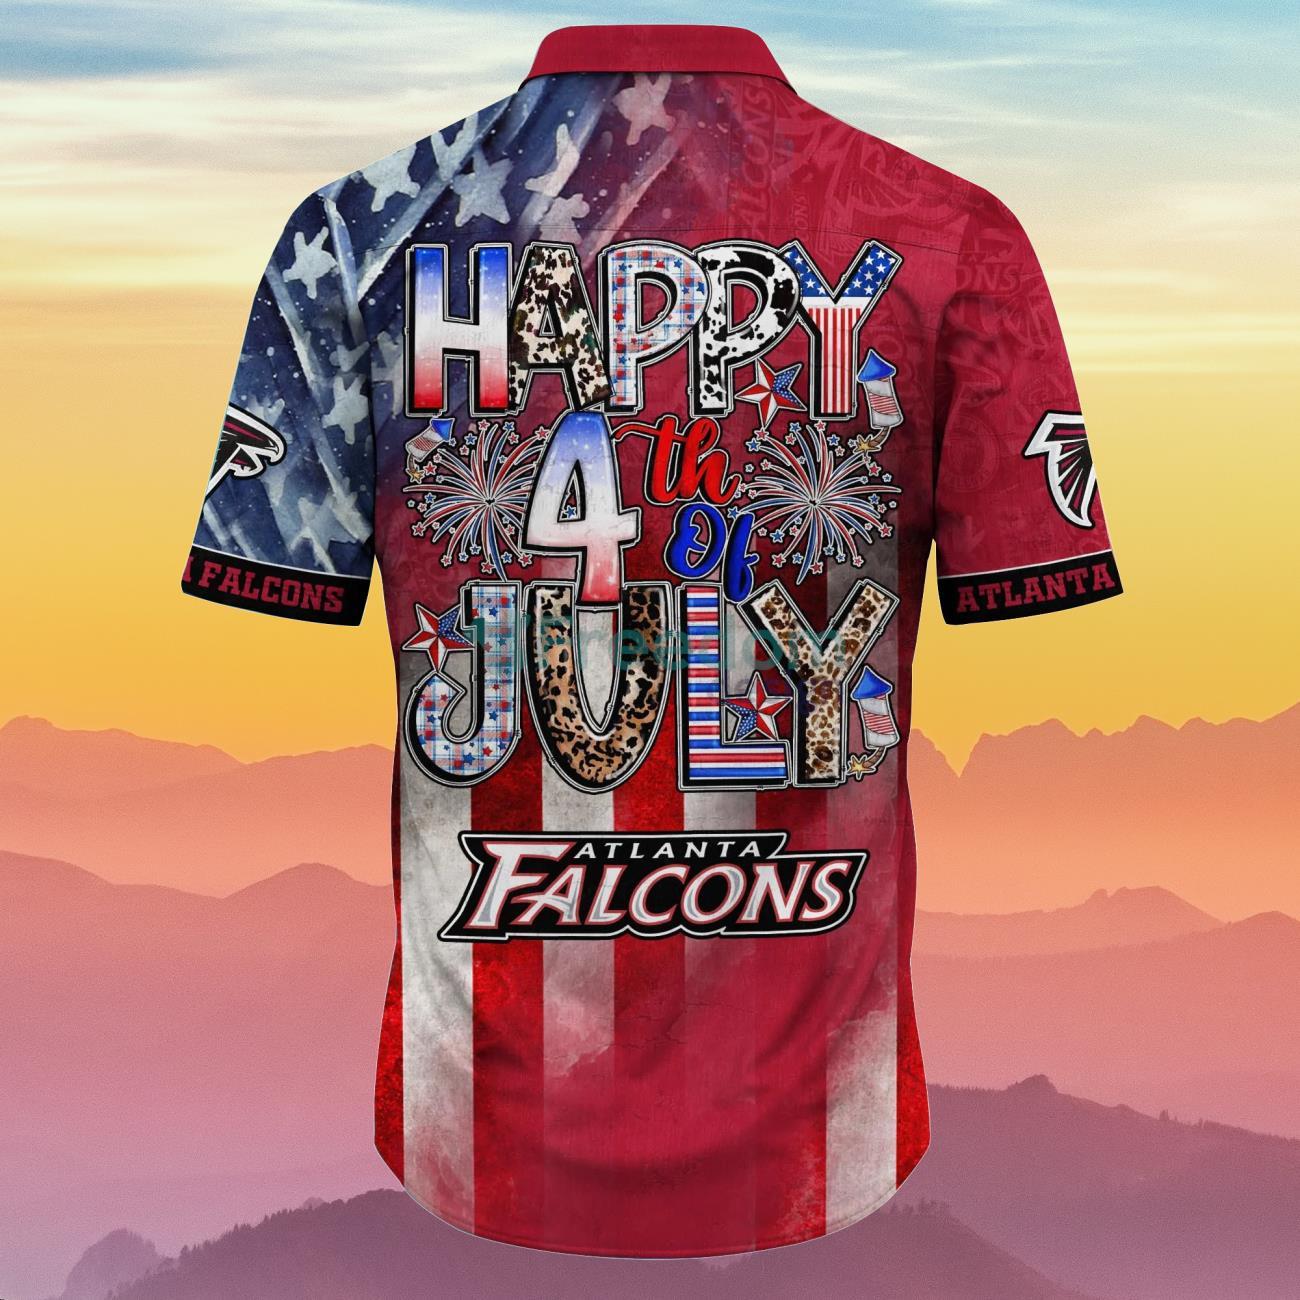 Atlanta Falcons Gifts, Merchandise, Falcons Apparel, Atlanta